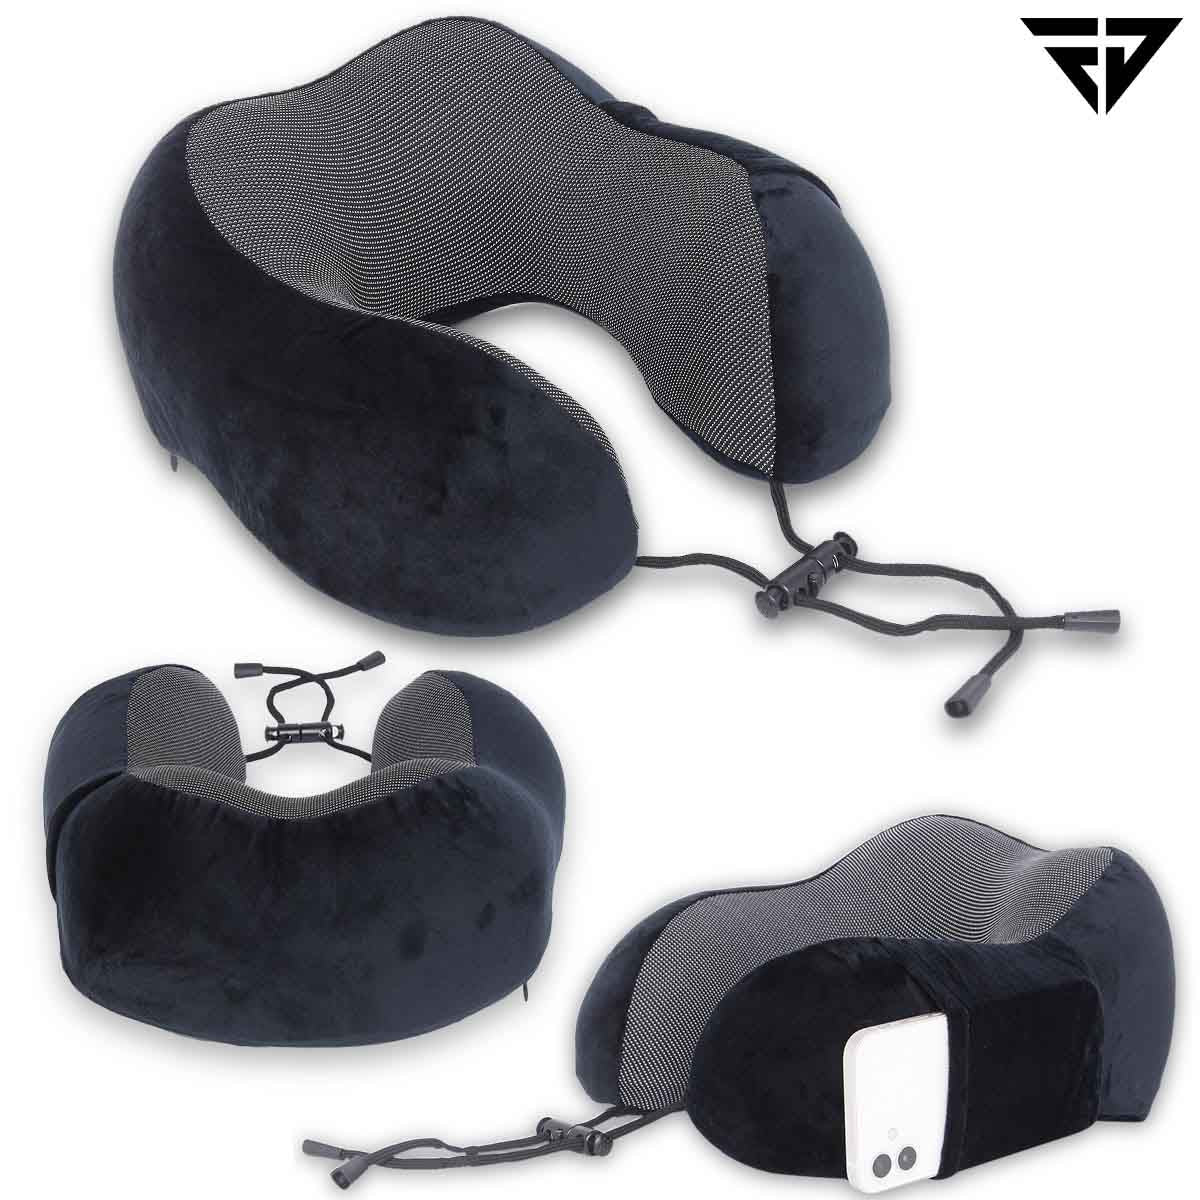 Black Memory Foam Travel Neck Support Pillow, Eye Mask, Noise Isolating EarPlugs Combo